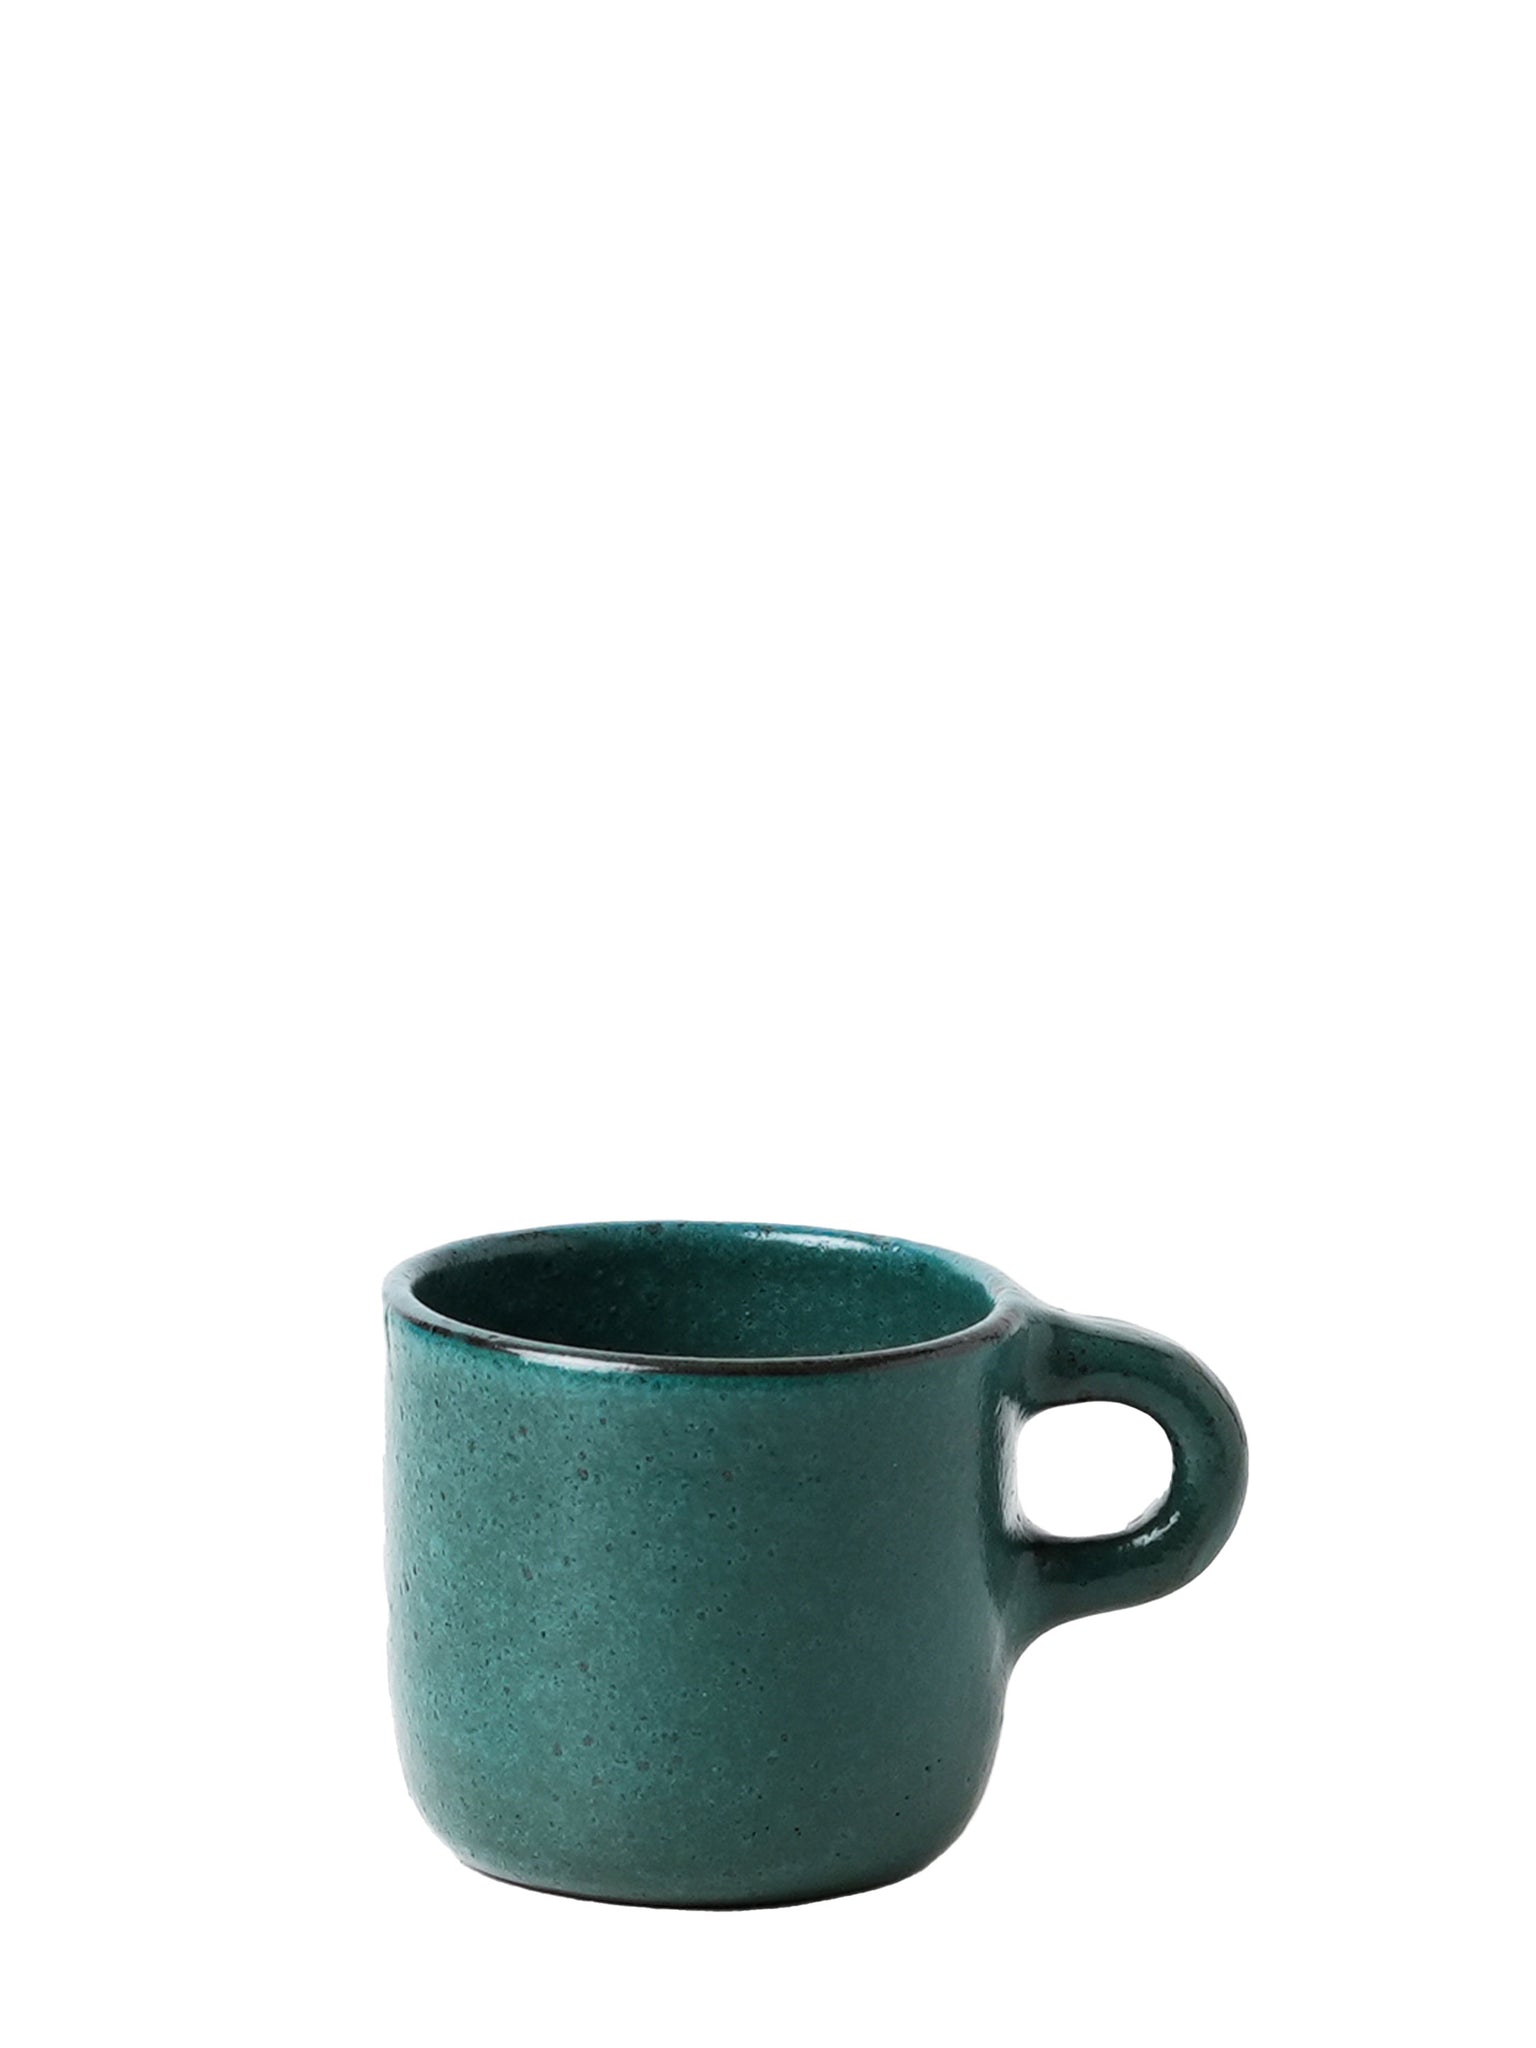 Green hand made ceramic mug by Gaëlle Le Doledec